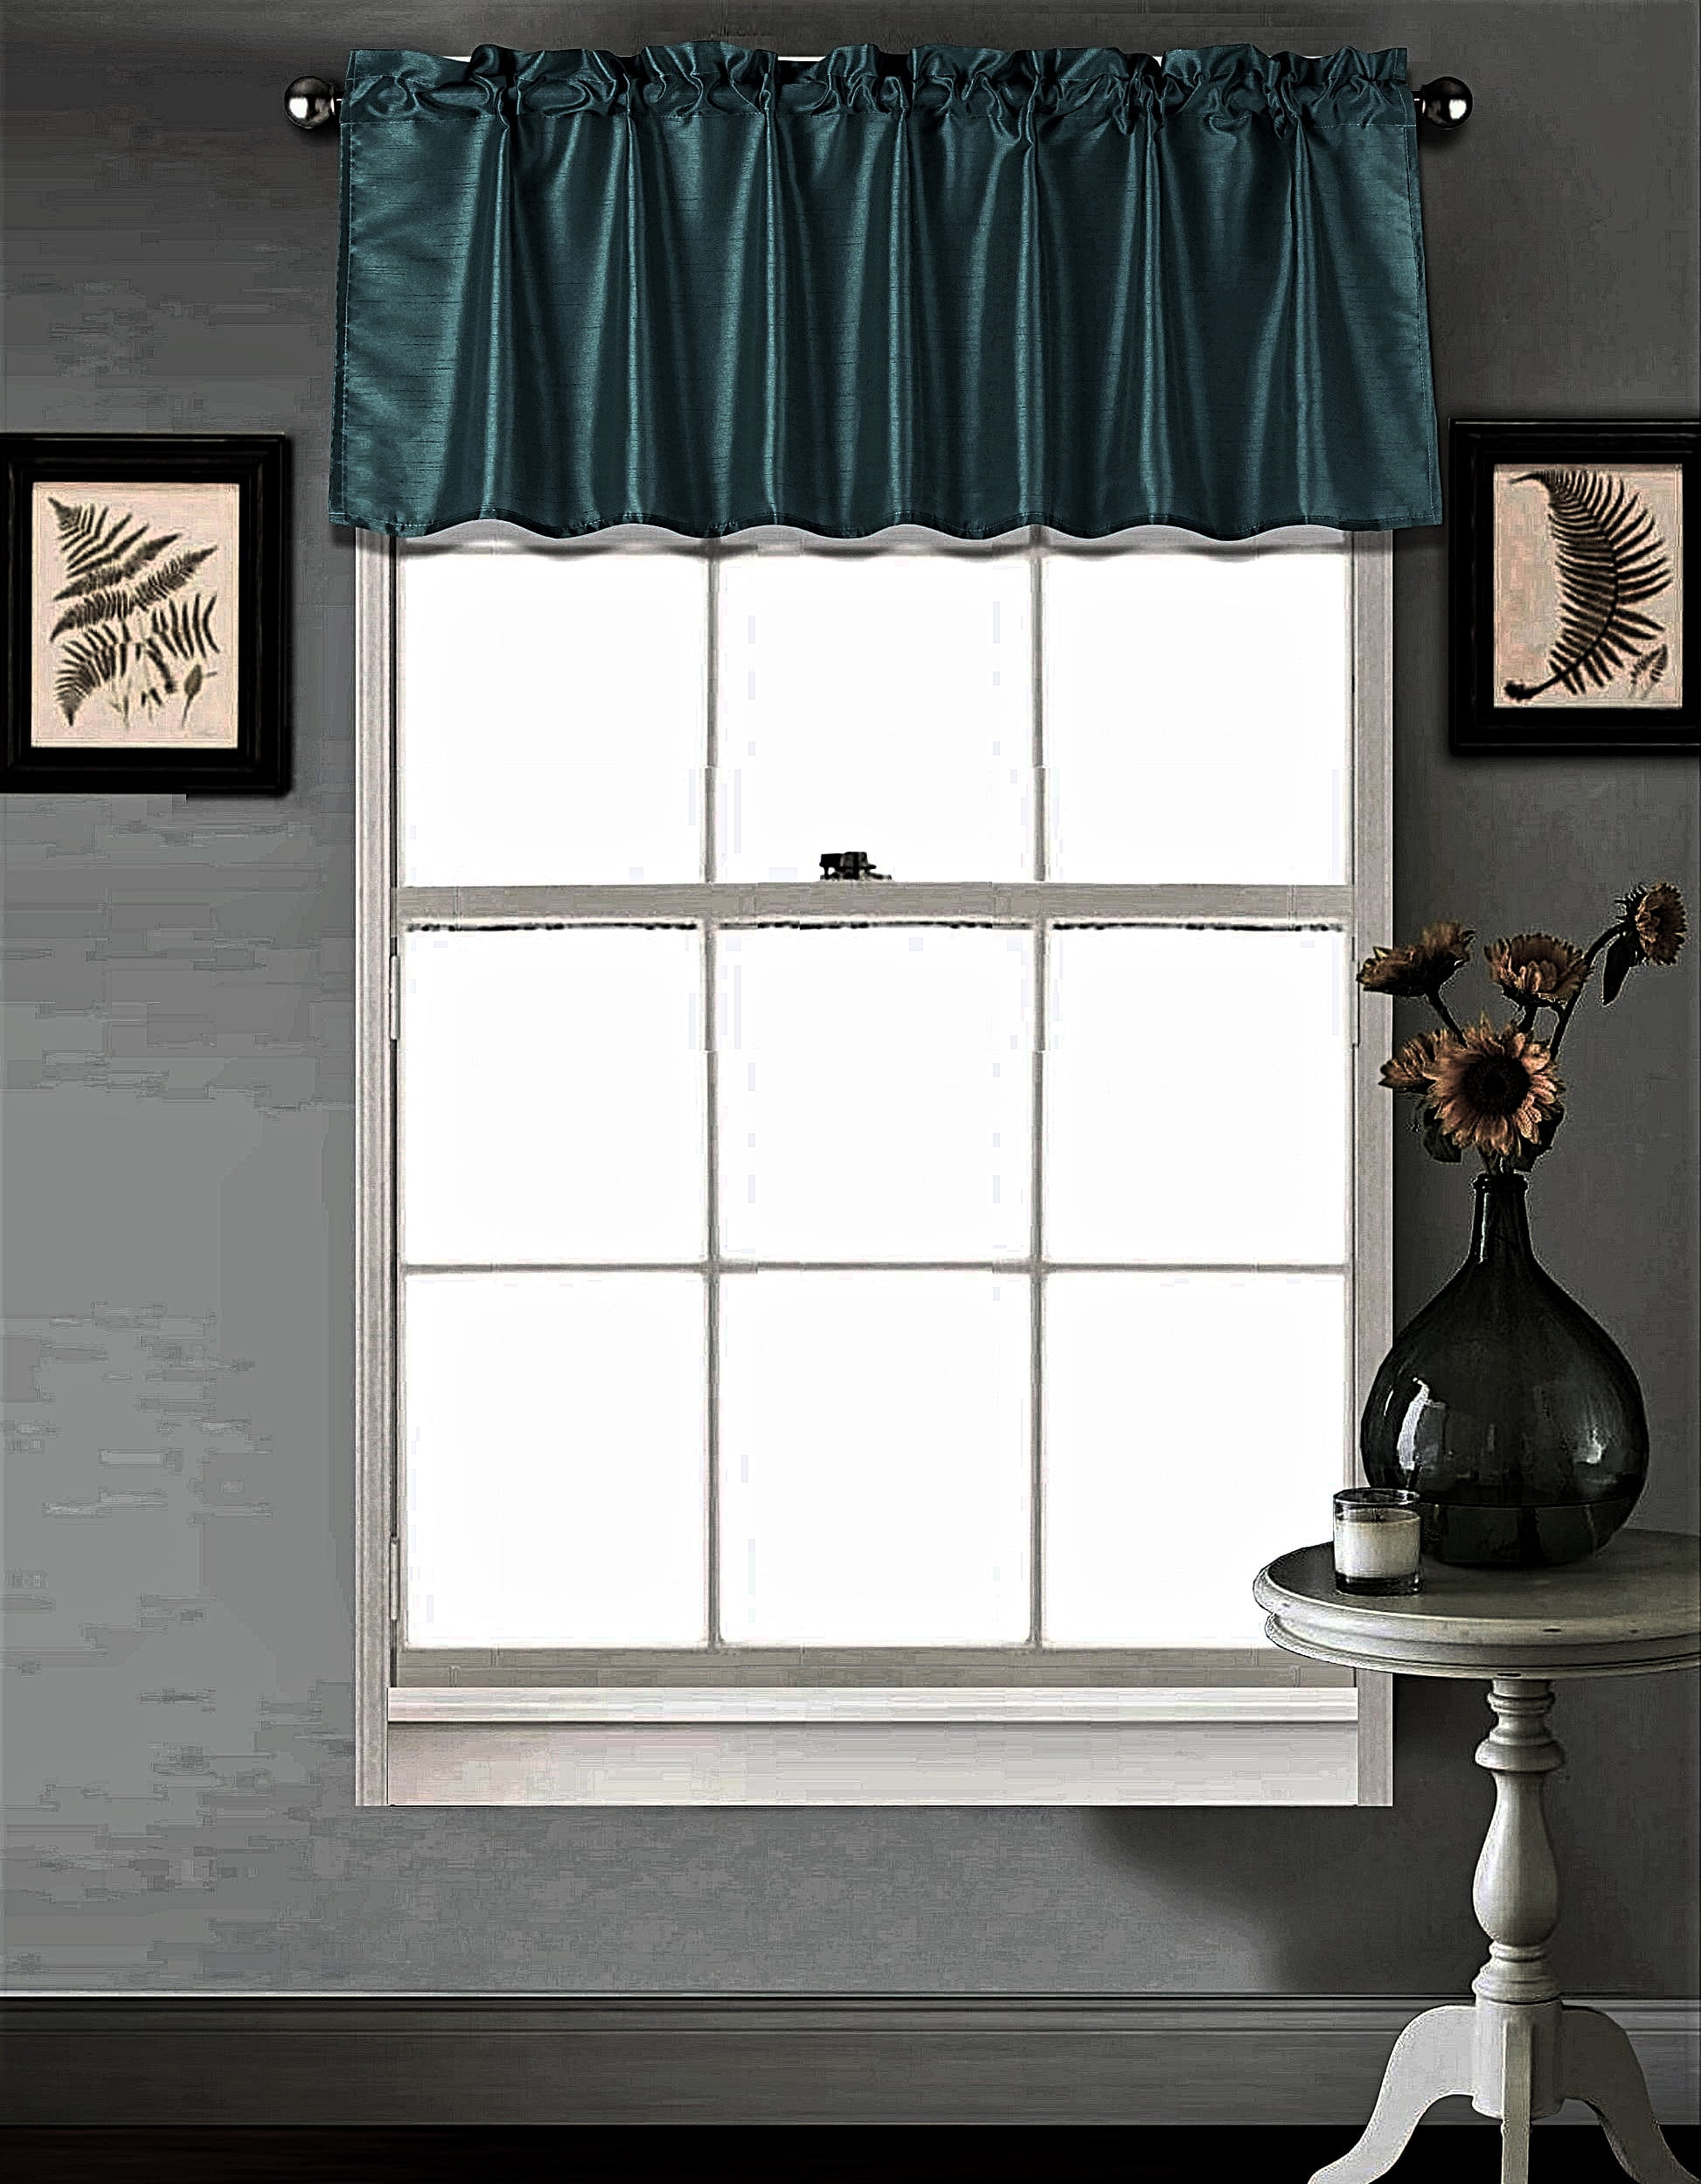 Details about   Lilac Metallic Print Faux Silk Grommet Decorative Window Valance,55" x18" NEW 